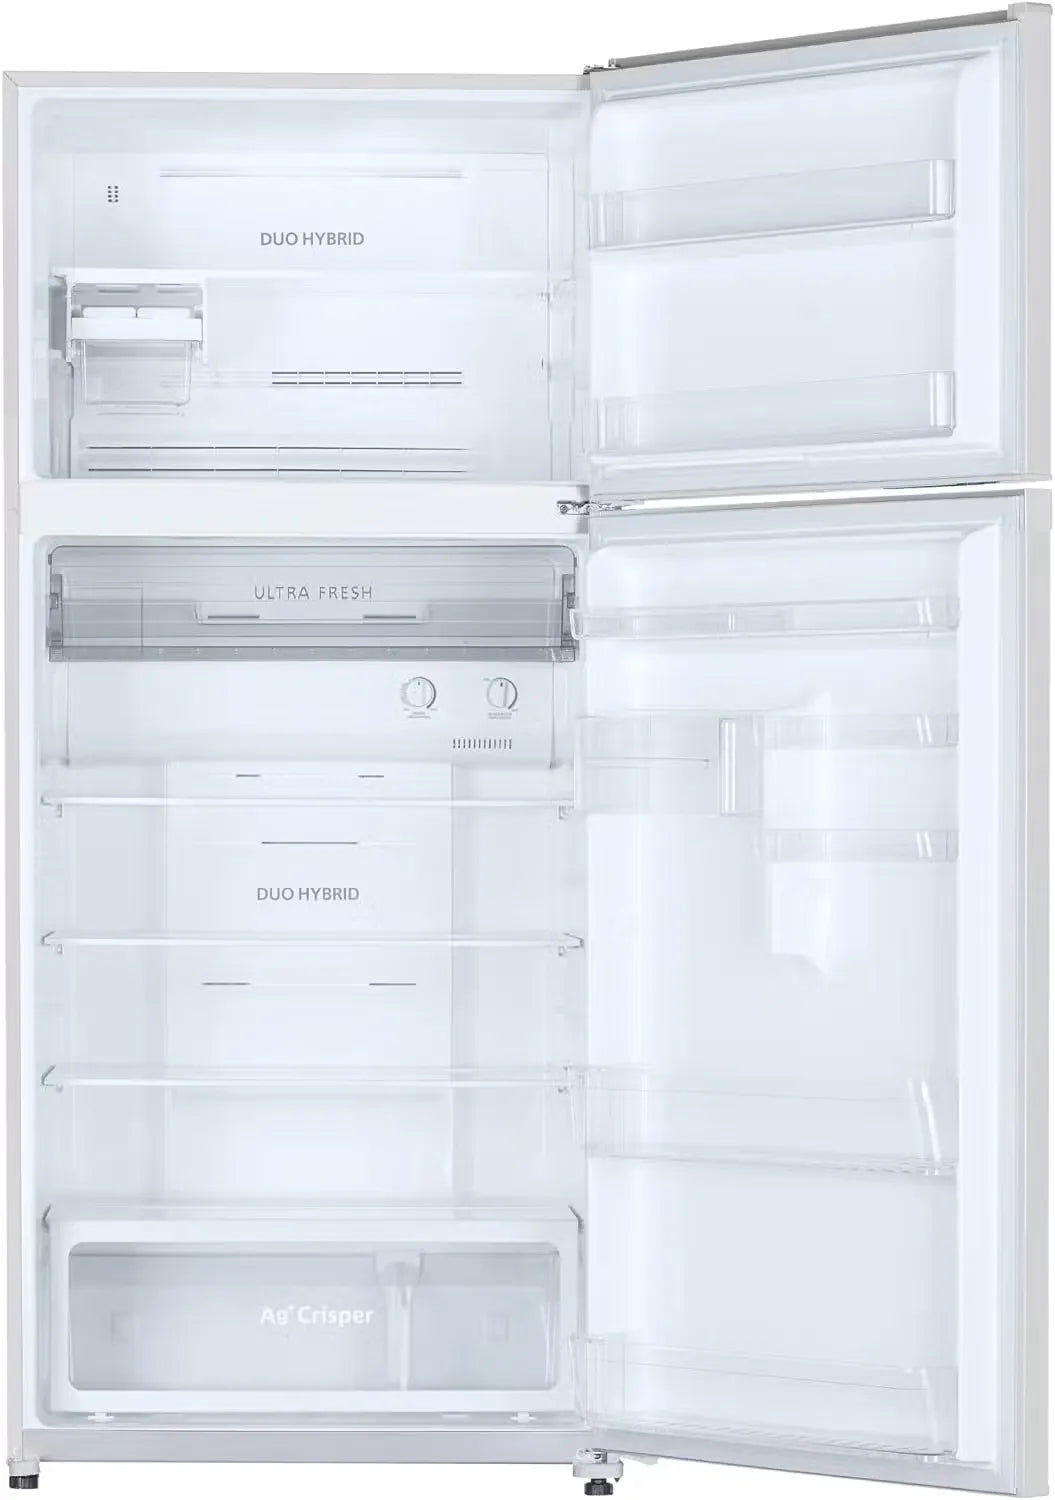 Sleek, white Toshiba GRA820U-X(W) 608L Top Mount Refrigerator with spacious interior and modern design.